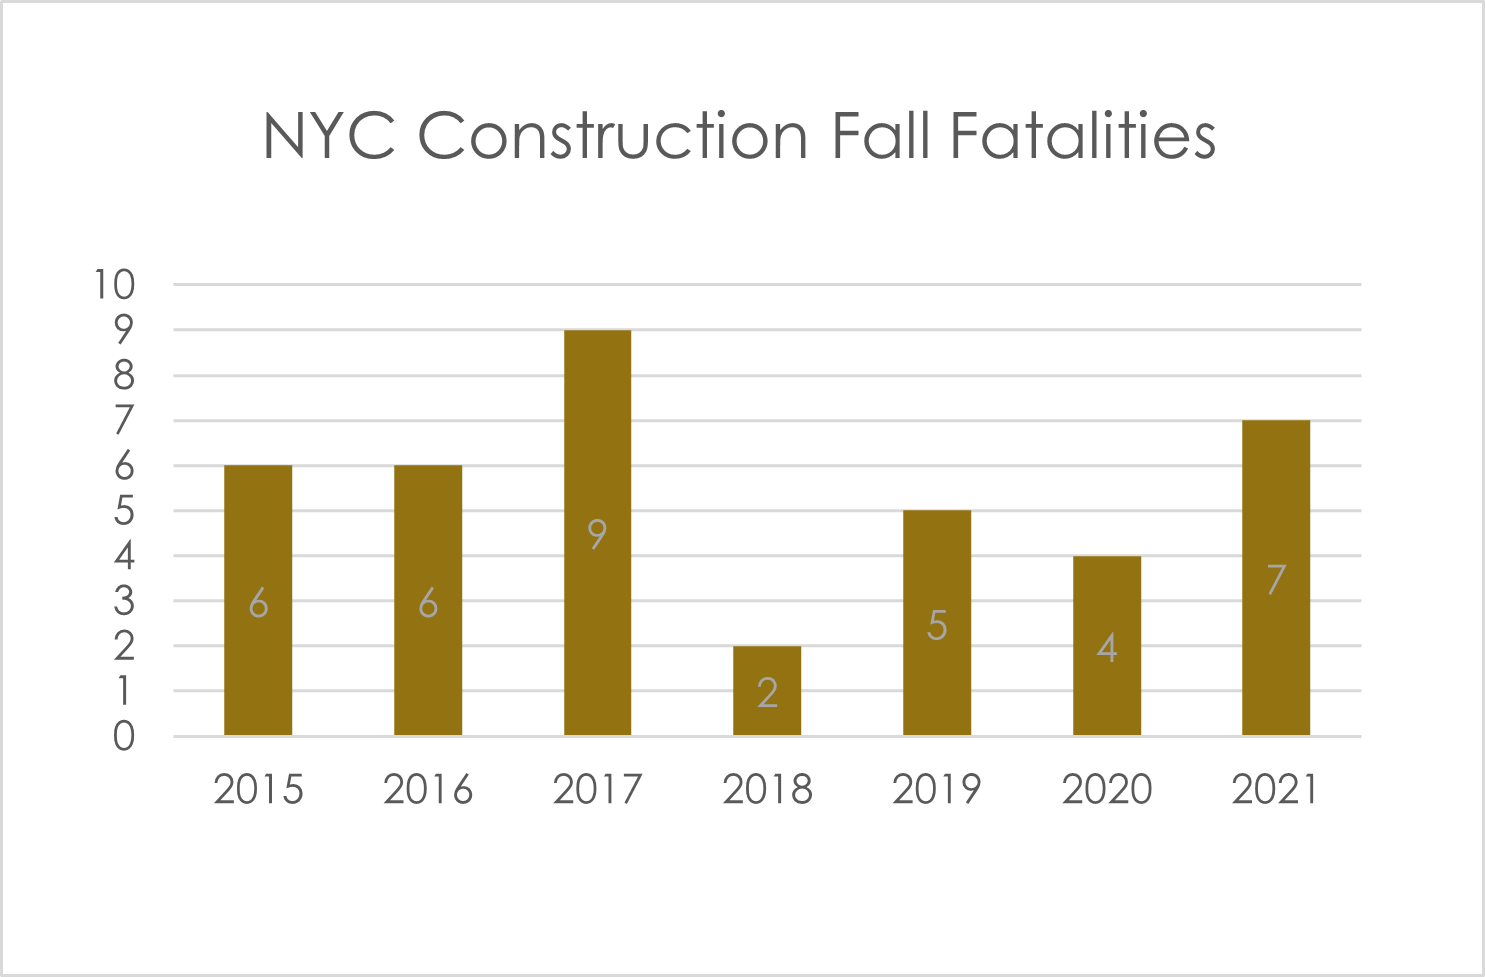 fall fatalities in NYC 2021